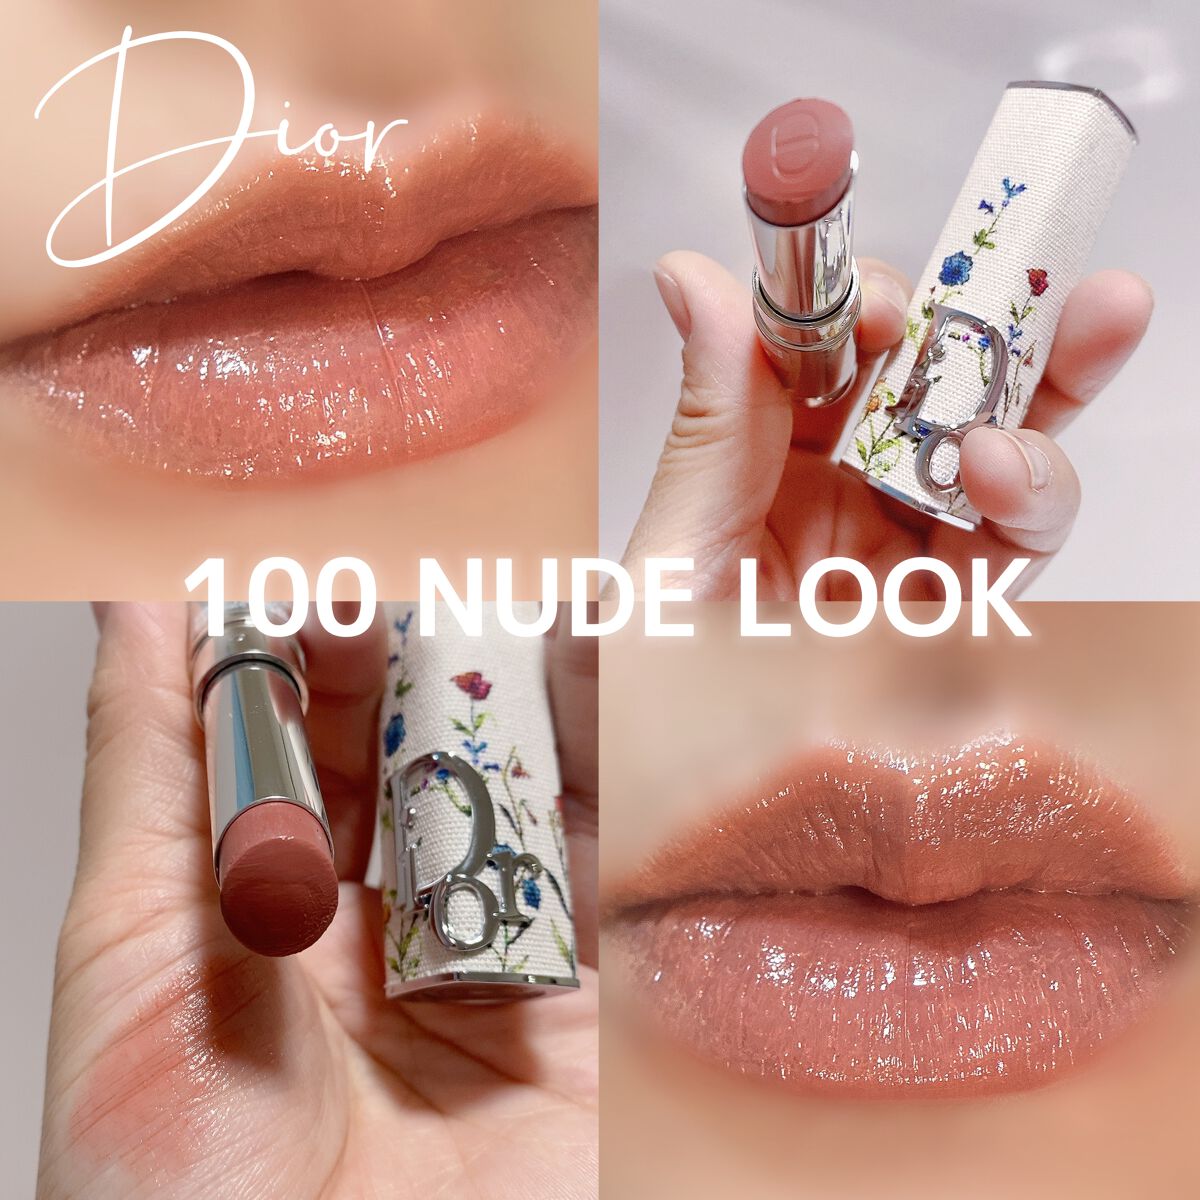 Dior アディクトリップスティック 100 NUDELOOK